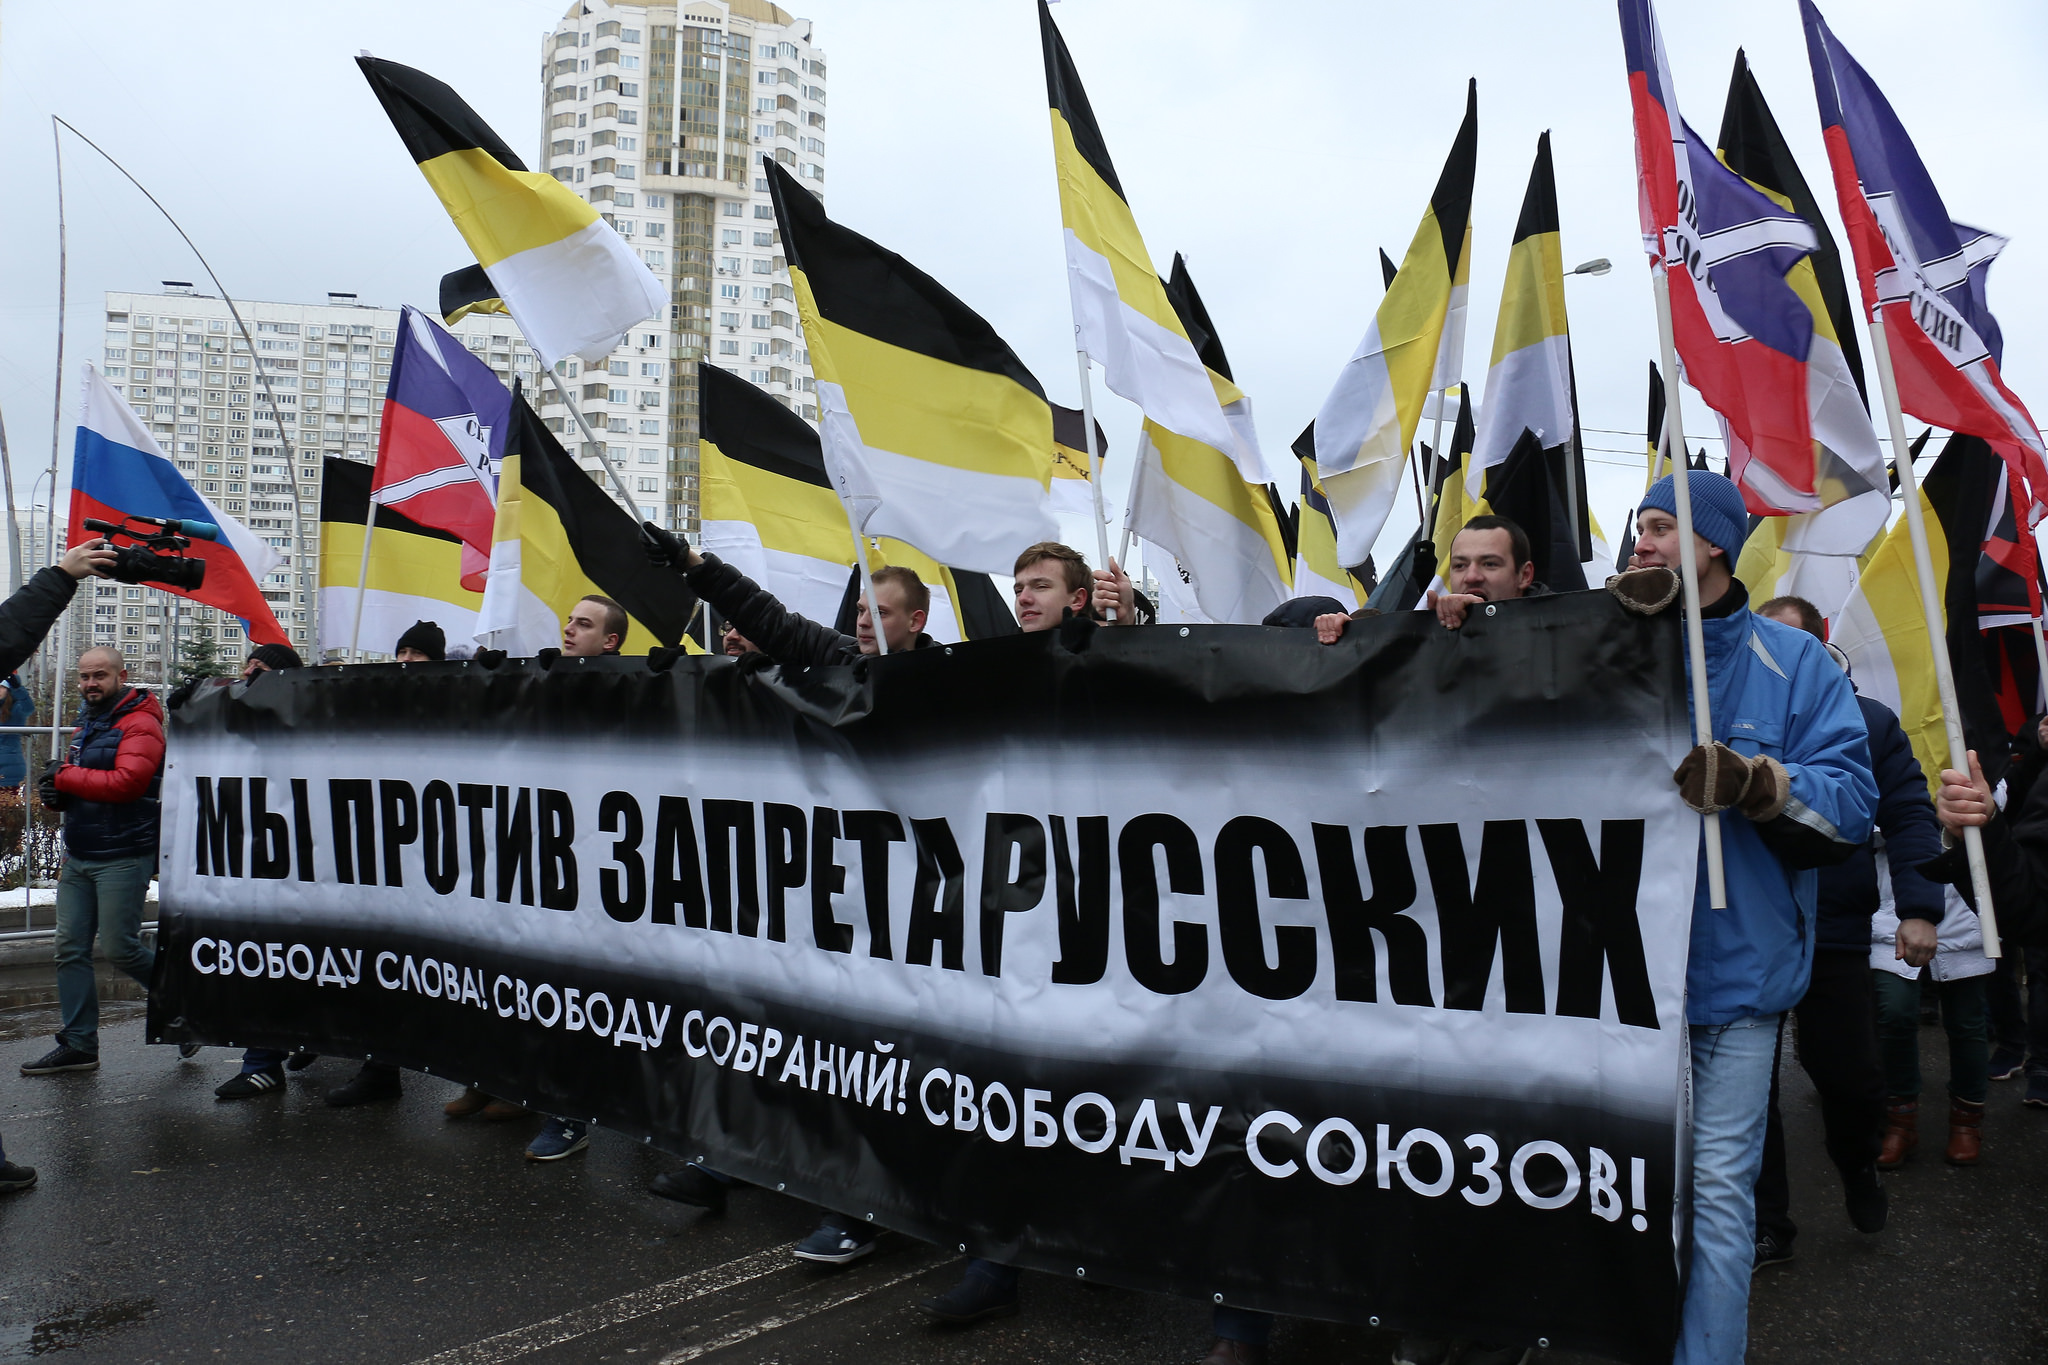 национализм, русский марш, митинг националистов, марш националистов